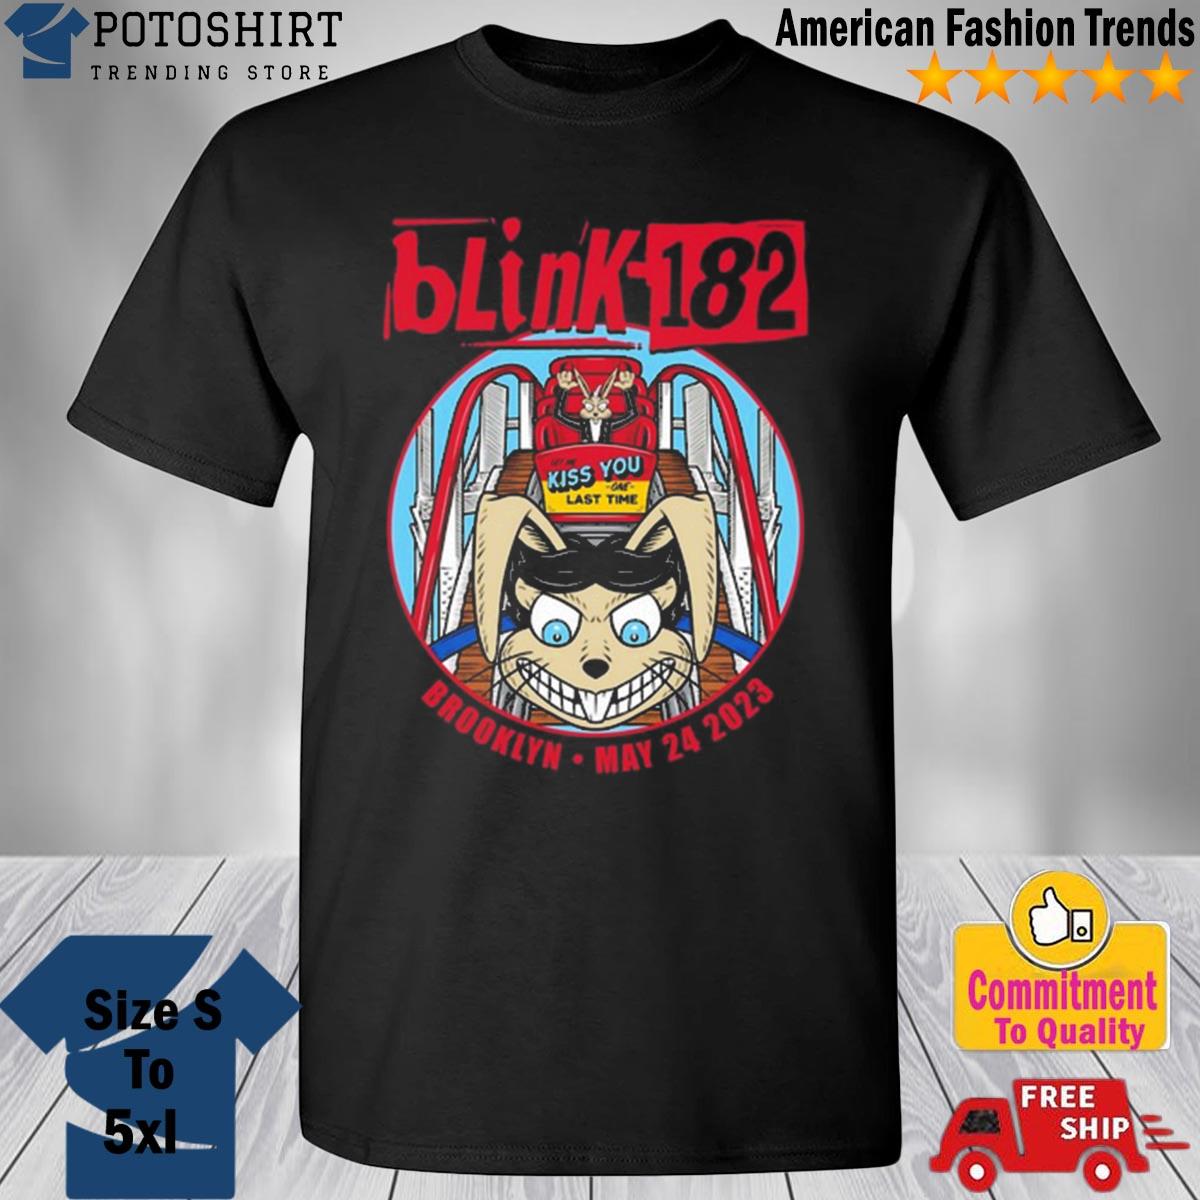 Blink-182 May 24, 2023 Barclays Center, Brooklyn, NY T-Shirt